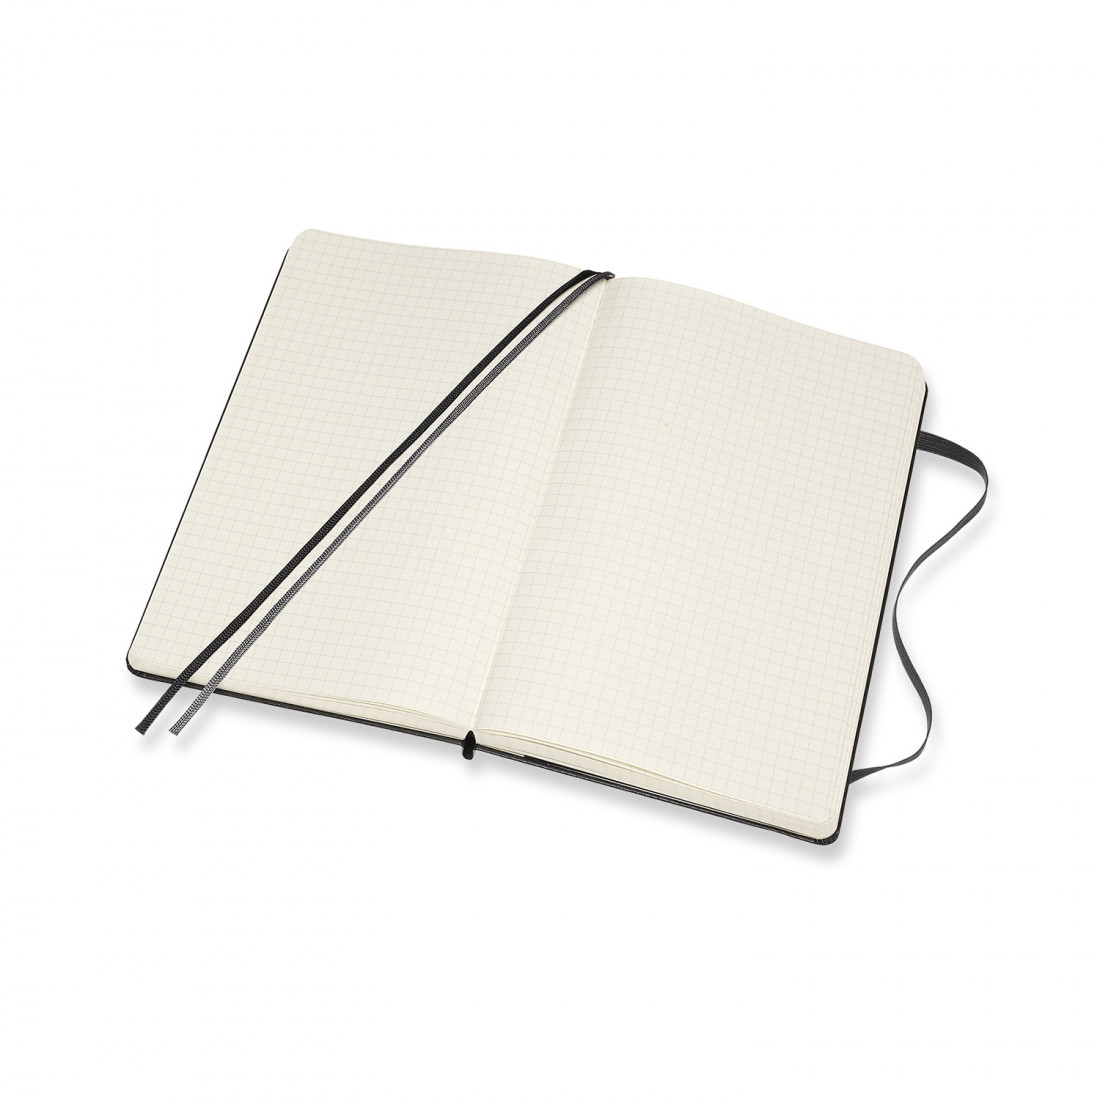 Notebook Large 13x21 Squared Expanded Version Black Hard Cover Moleskine